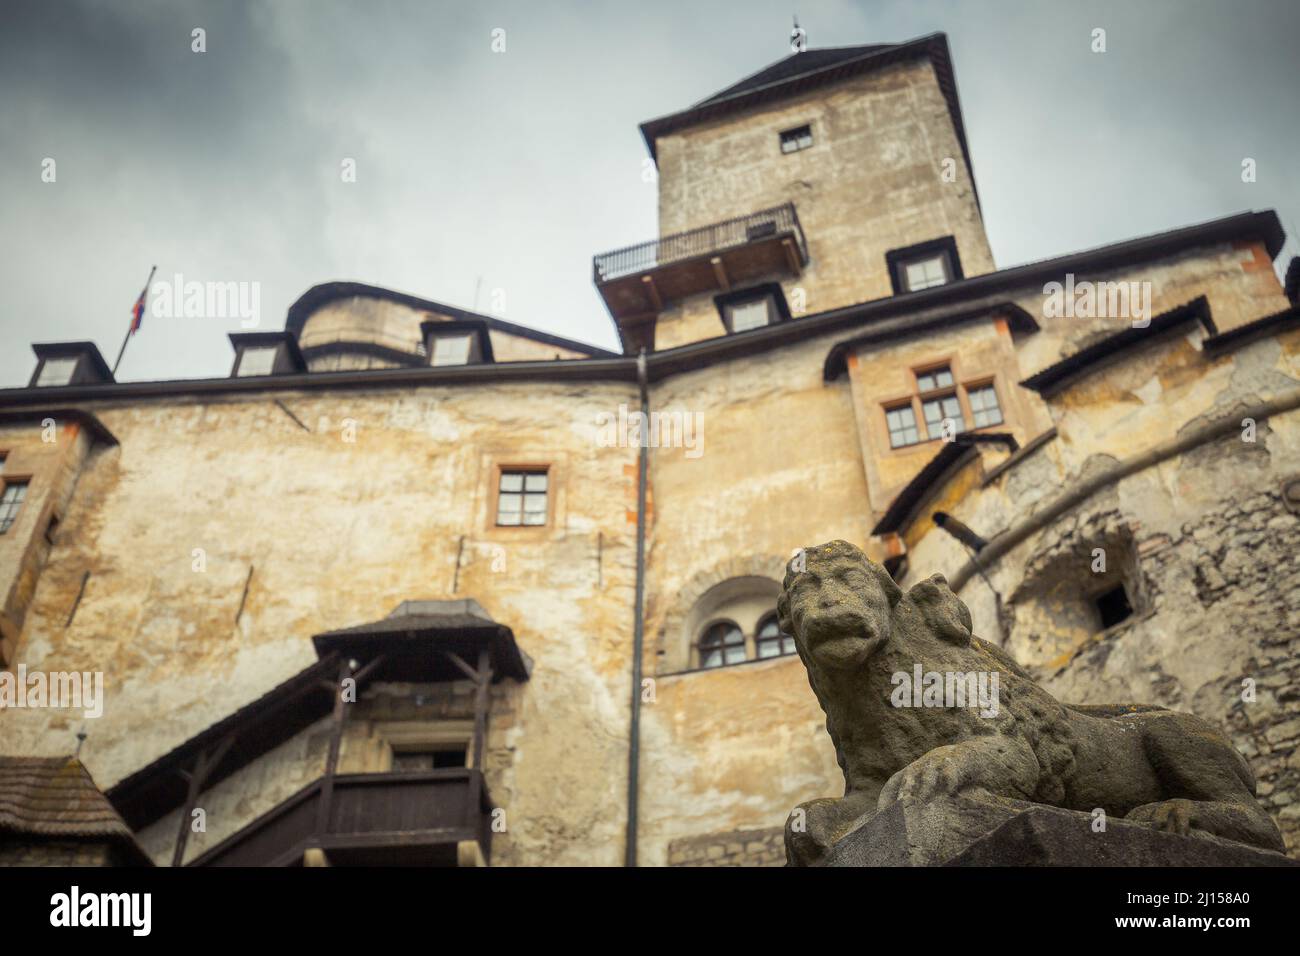 The medieval Orava Castle, Slovakia, Europe. Stock Photo